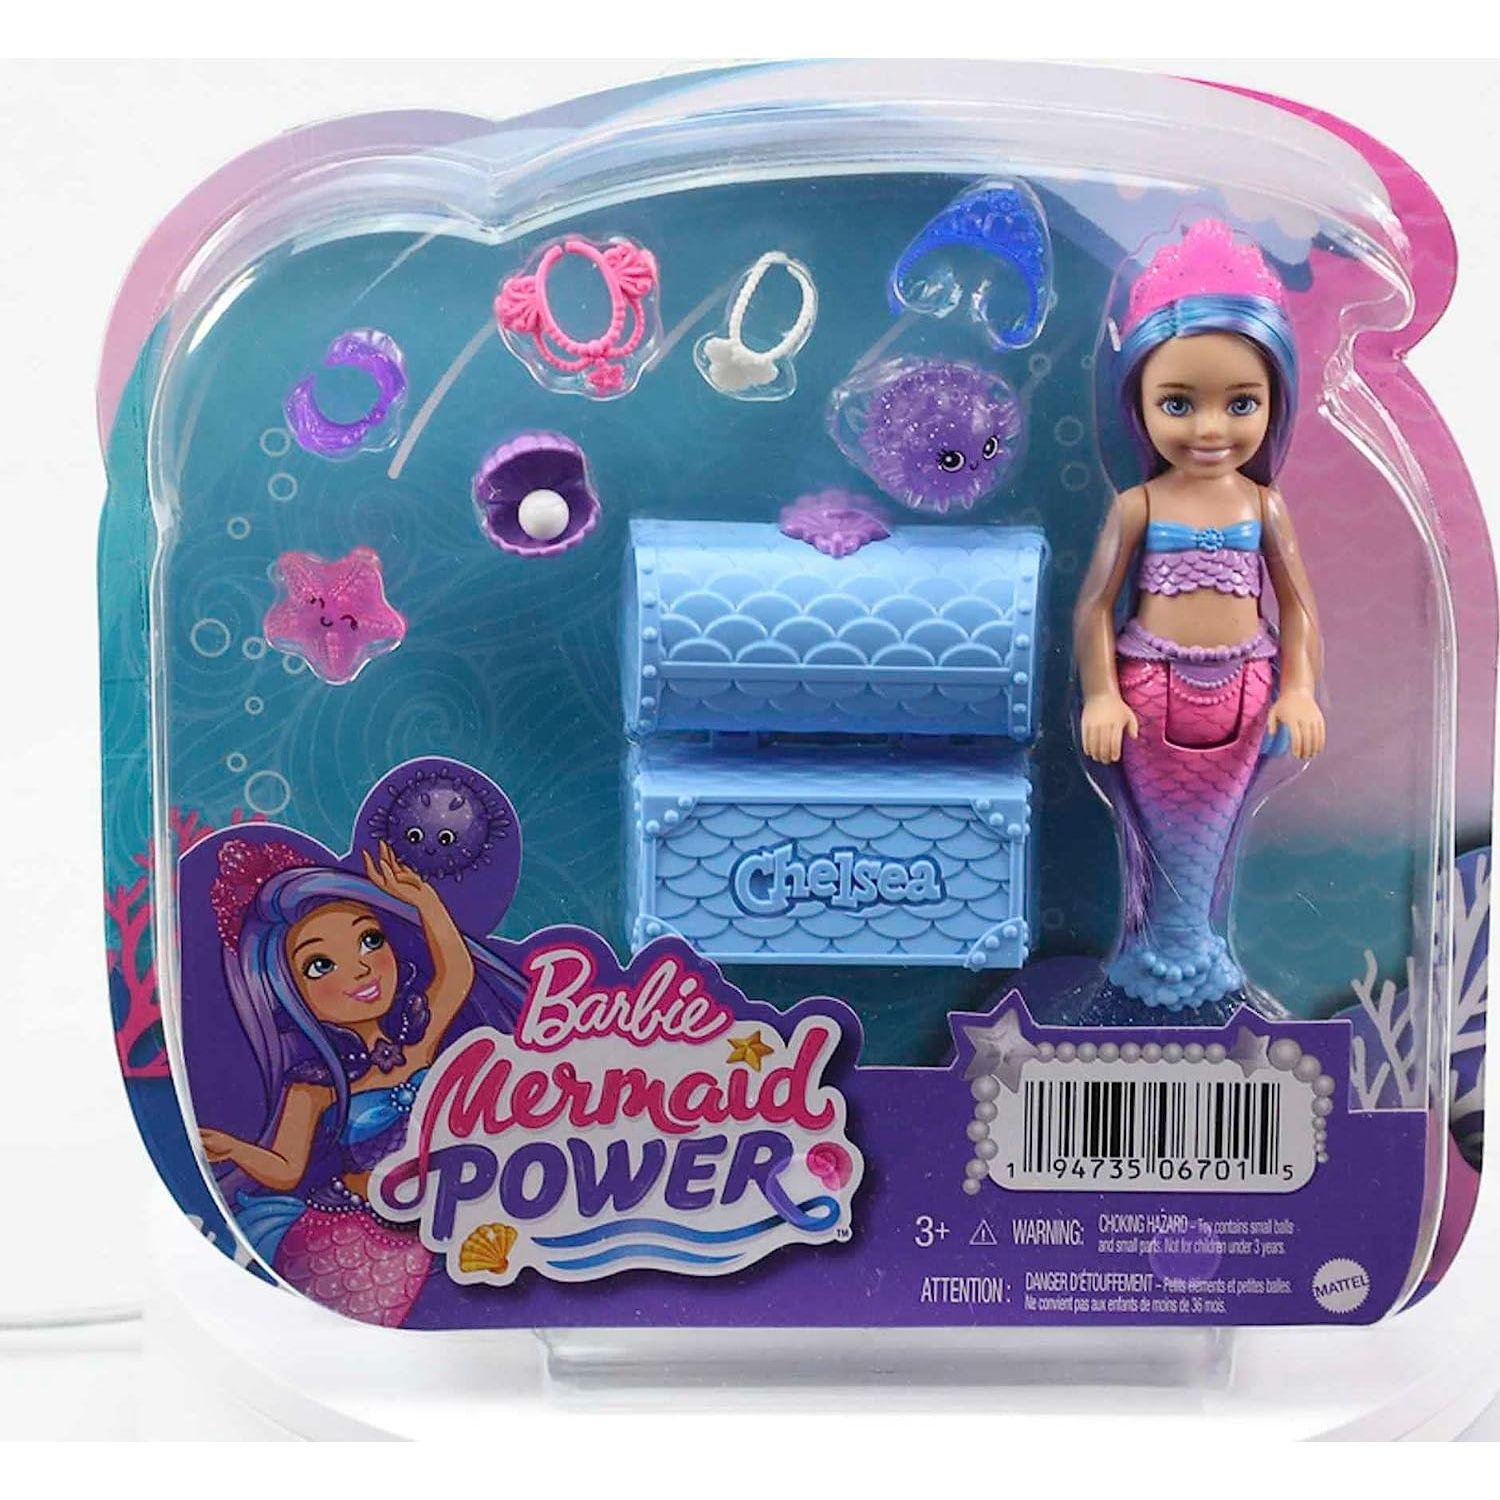 Barbie Mermaid Power Doll & Accessories, Chelsea Small Doll with Blue & Purple Hair, 2 Ocean Pets & Treasure Chest - BumbleToys - 5-7 Years, Barbie, Fashion Dolls & Accessories, Girls, Mermaid, Pre-Order